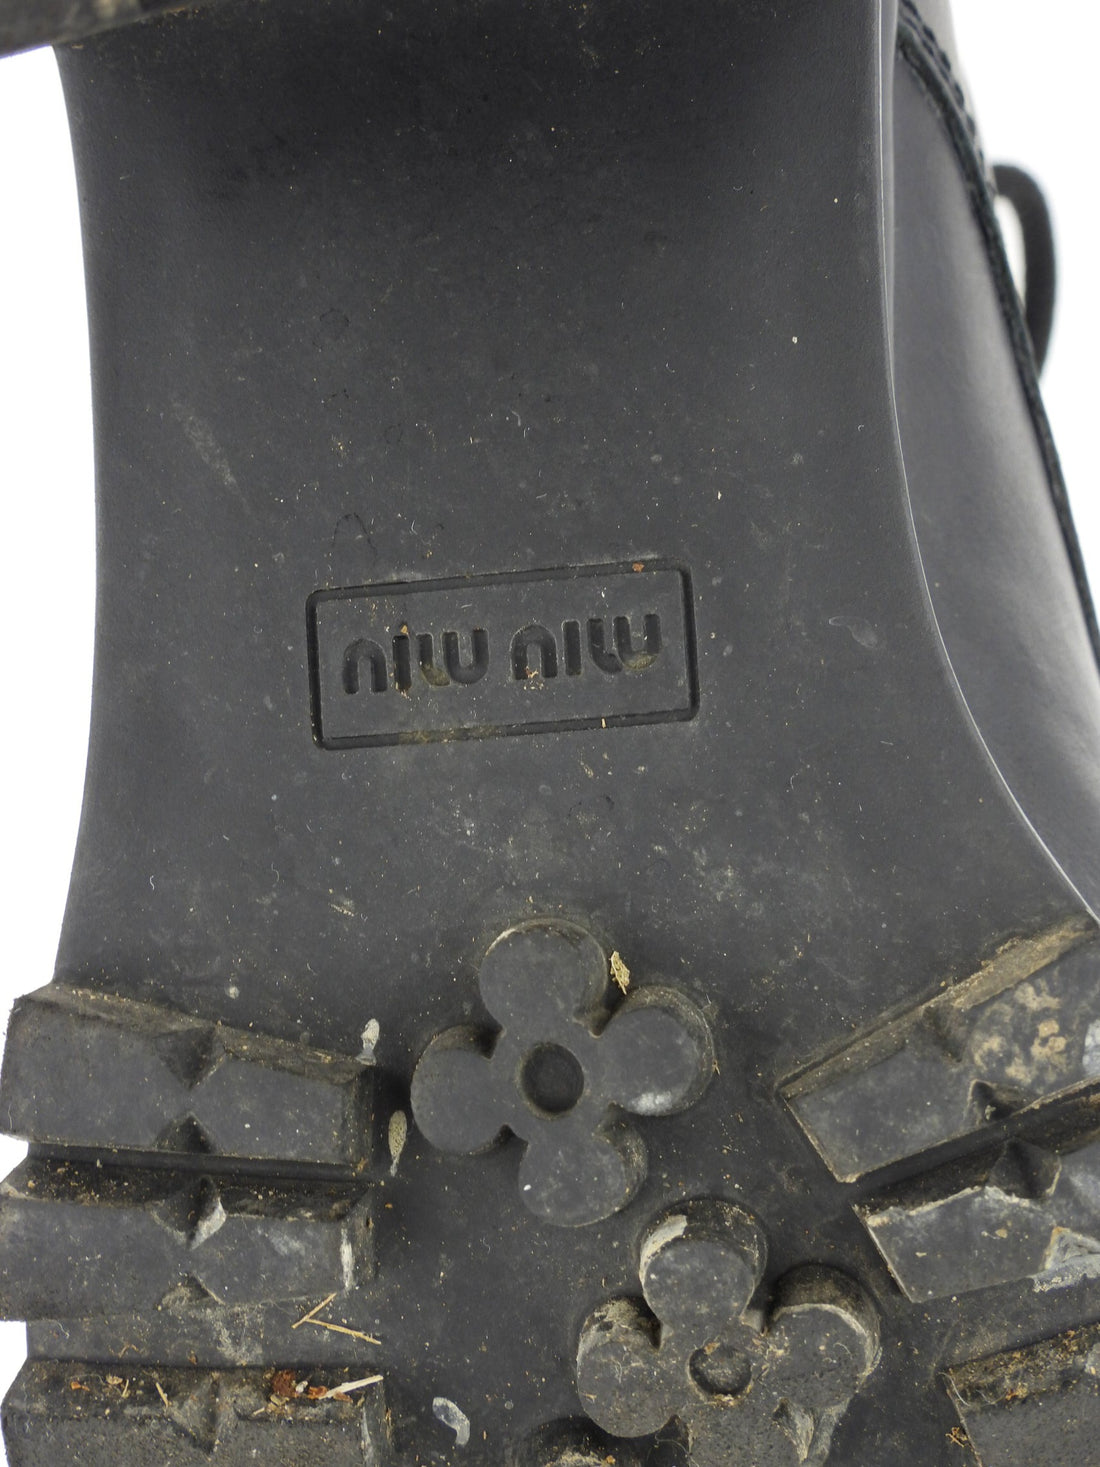 Miu Miu Black Leather Laced Round Toe Block Heel Ankle Boots - 37.5